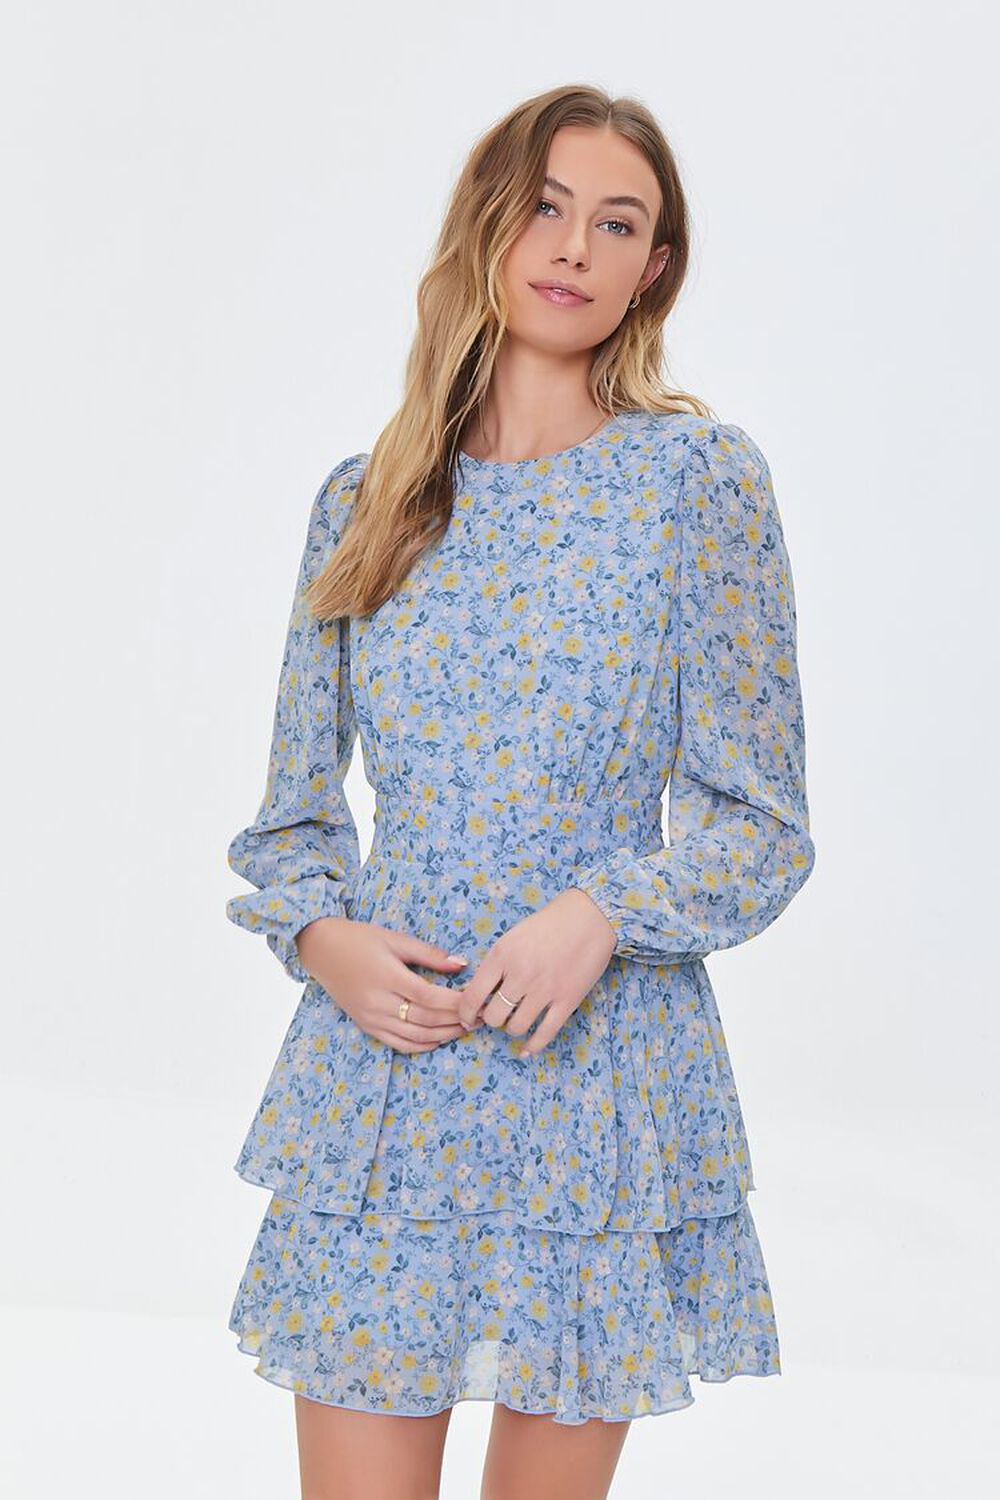 BLUE/MULTI Ditsy Floral Chiffon Mini Dress, image 1